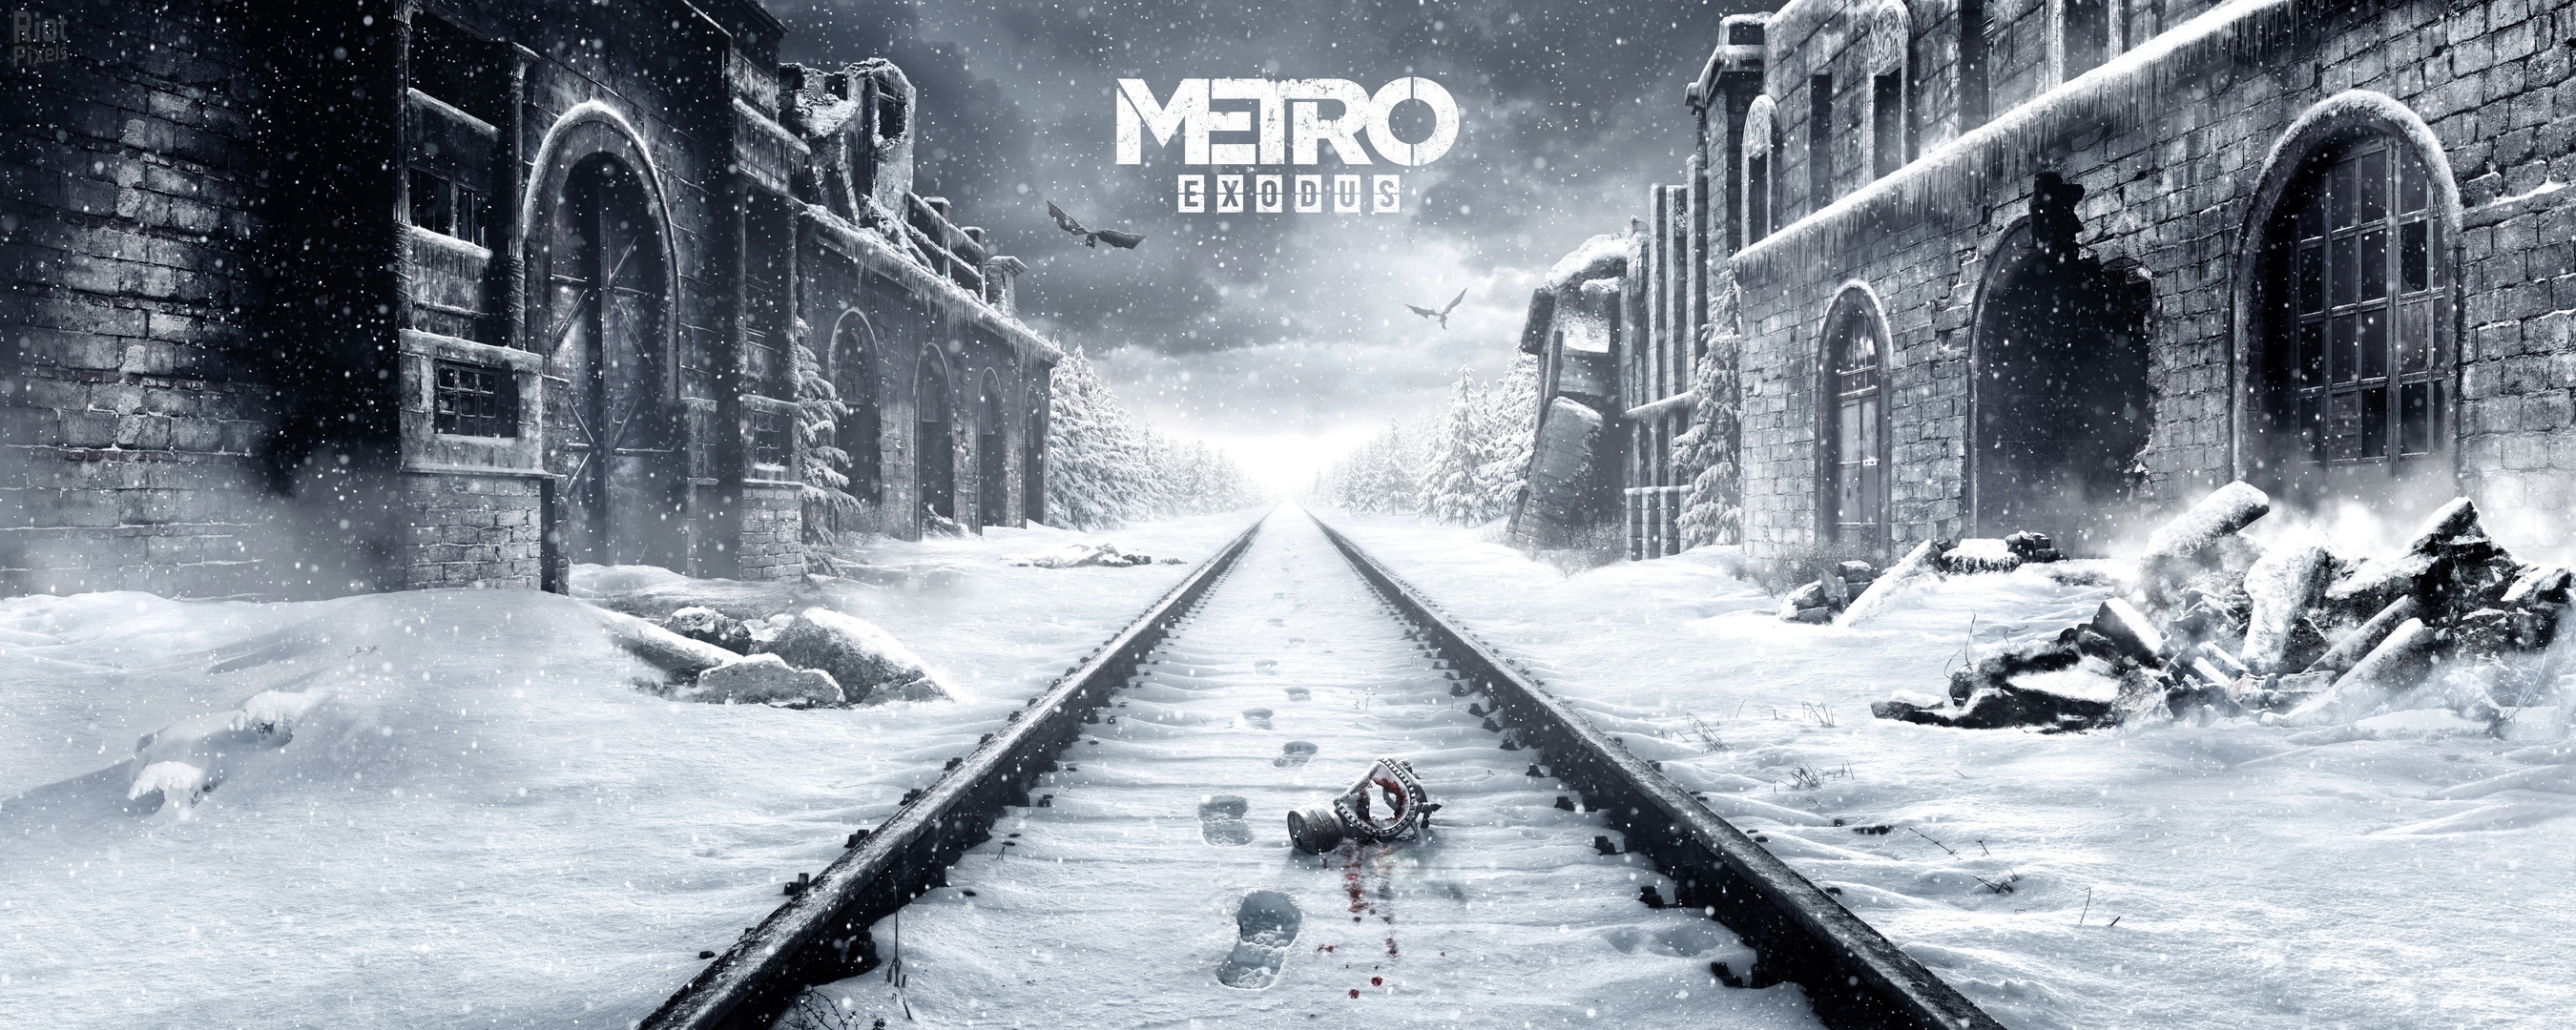 Metro Exodus Gold Edition v 1 0 7 16 2 DLC MULTi17 GOG Linux Wine